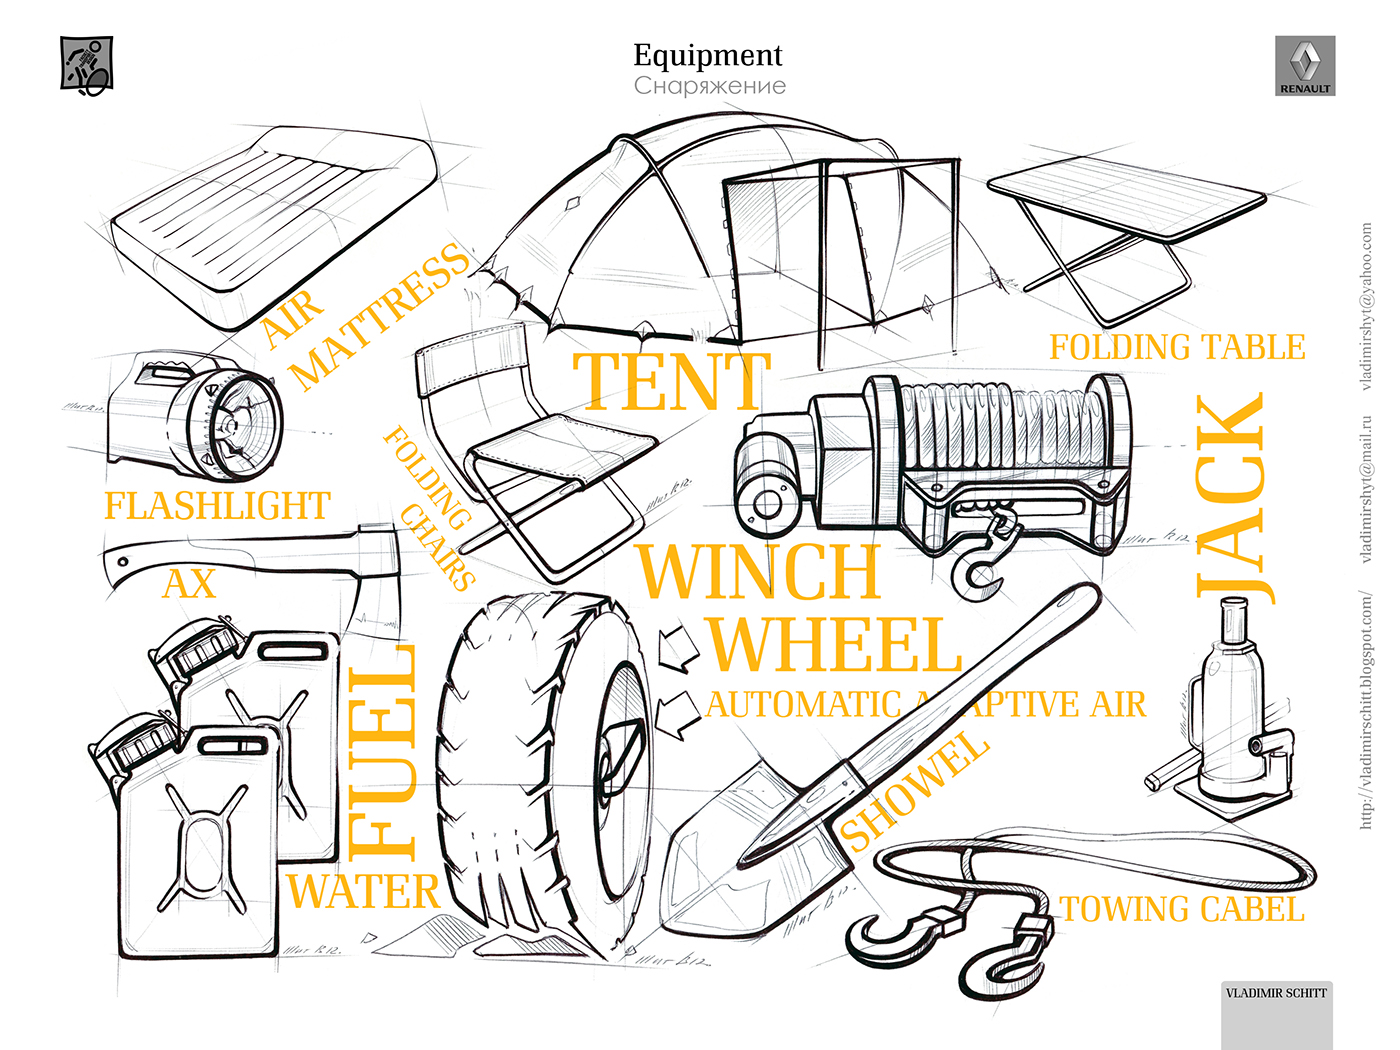 renault automotive   car design car sketches renault sketches sketches Travel vladimir schitt